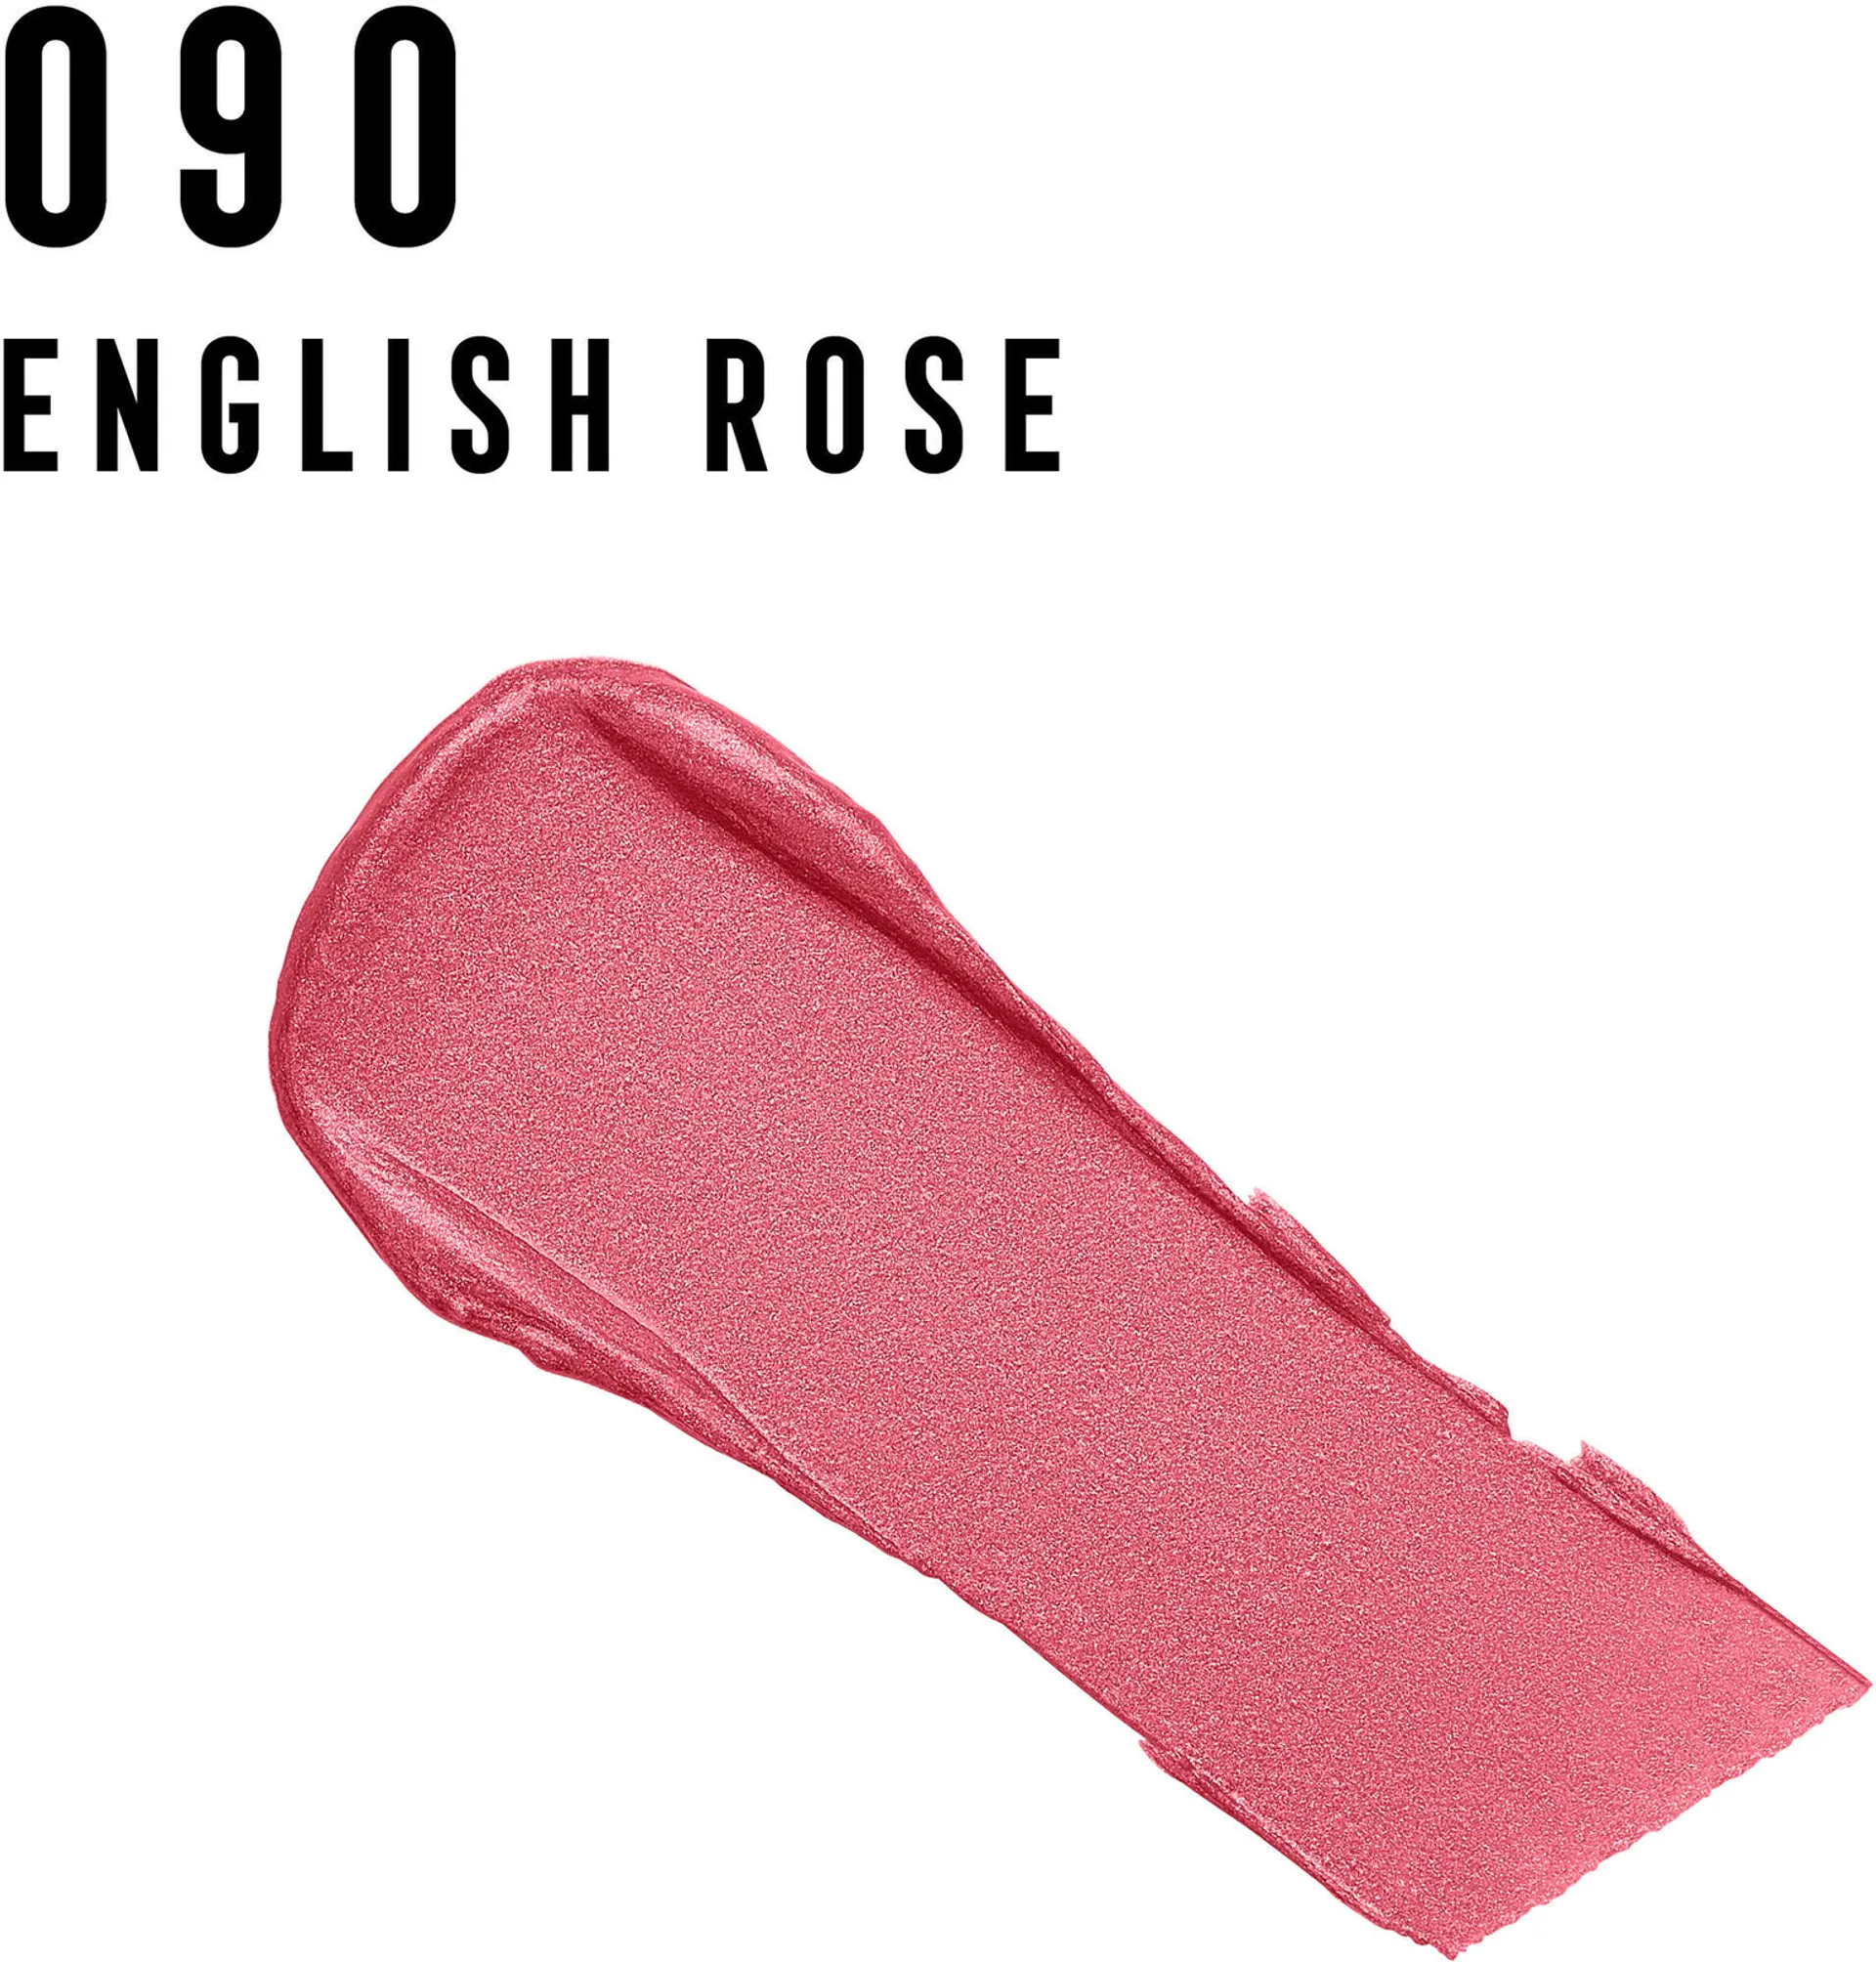 Max Factor Colour Elixir huulipuna 4 g, 090 English Rose - 4